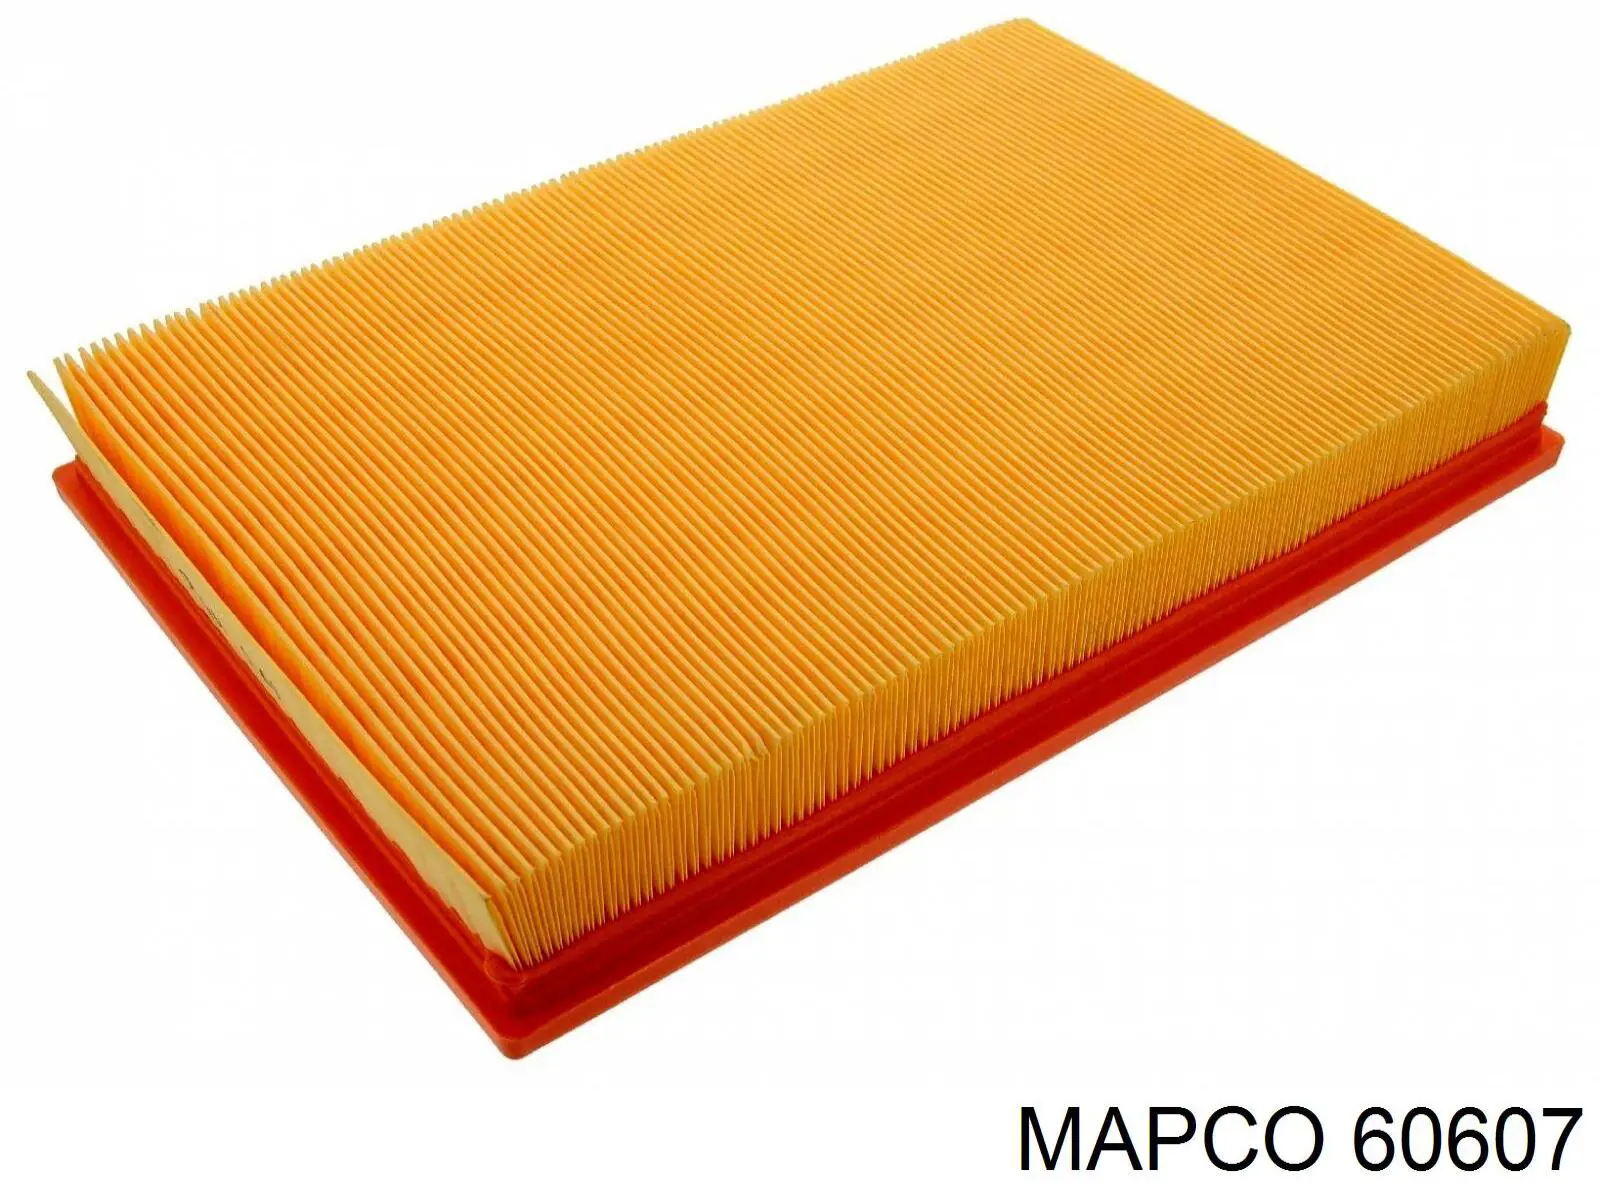 60607 Mapco filtro de aire